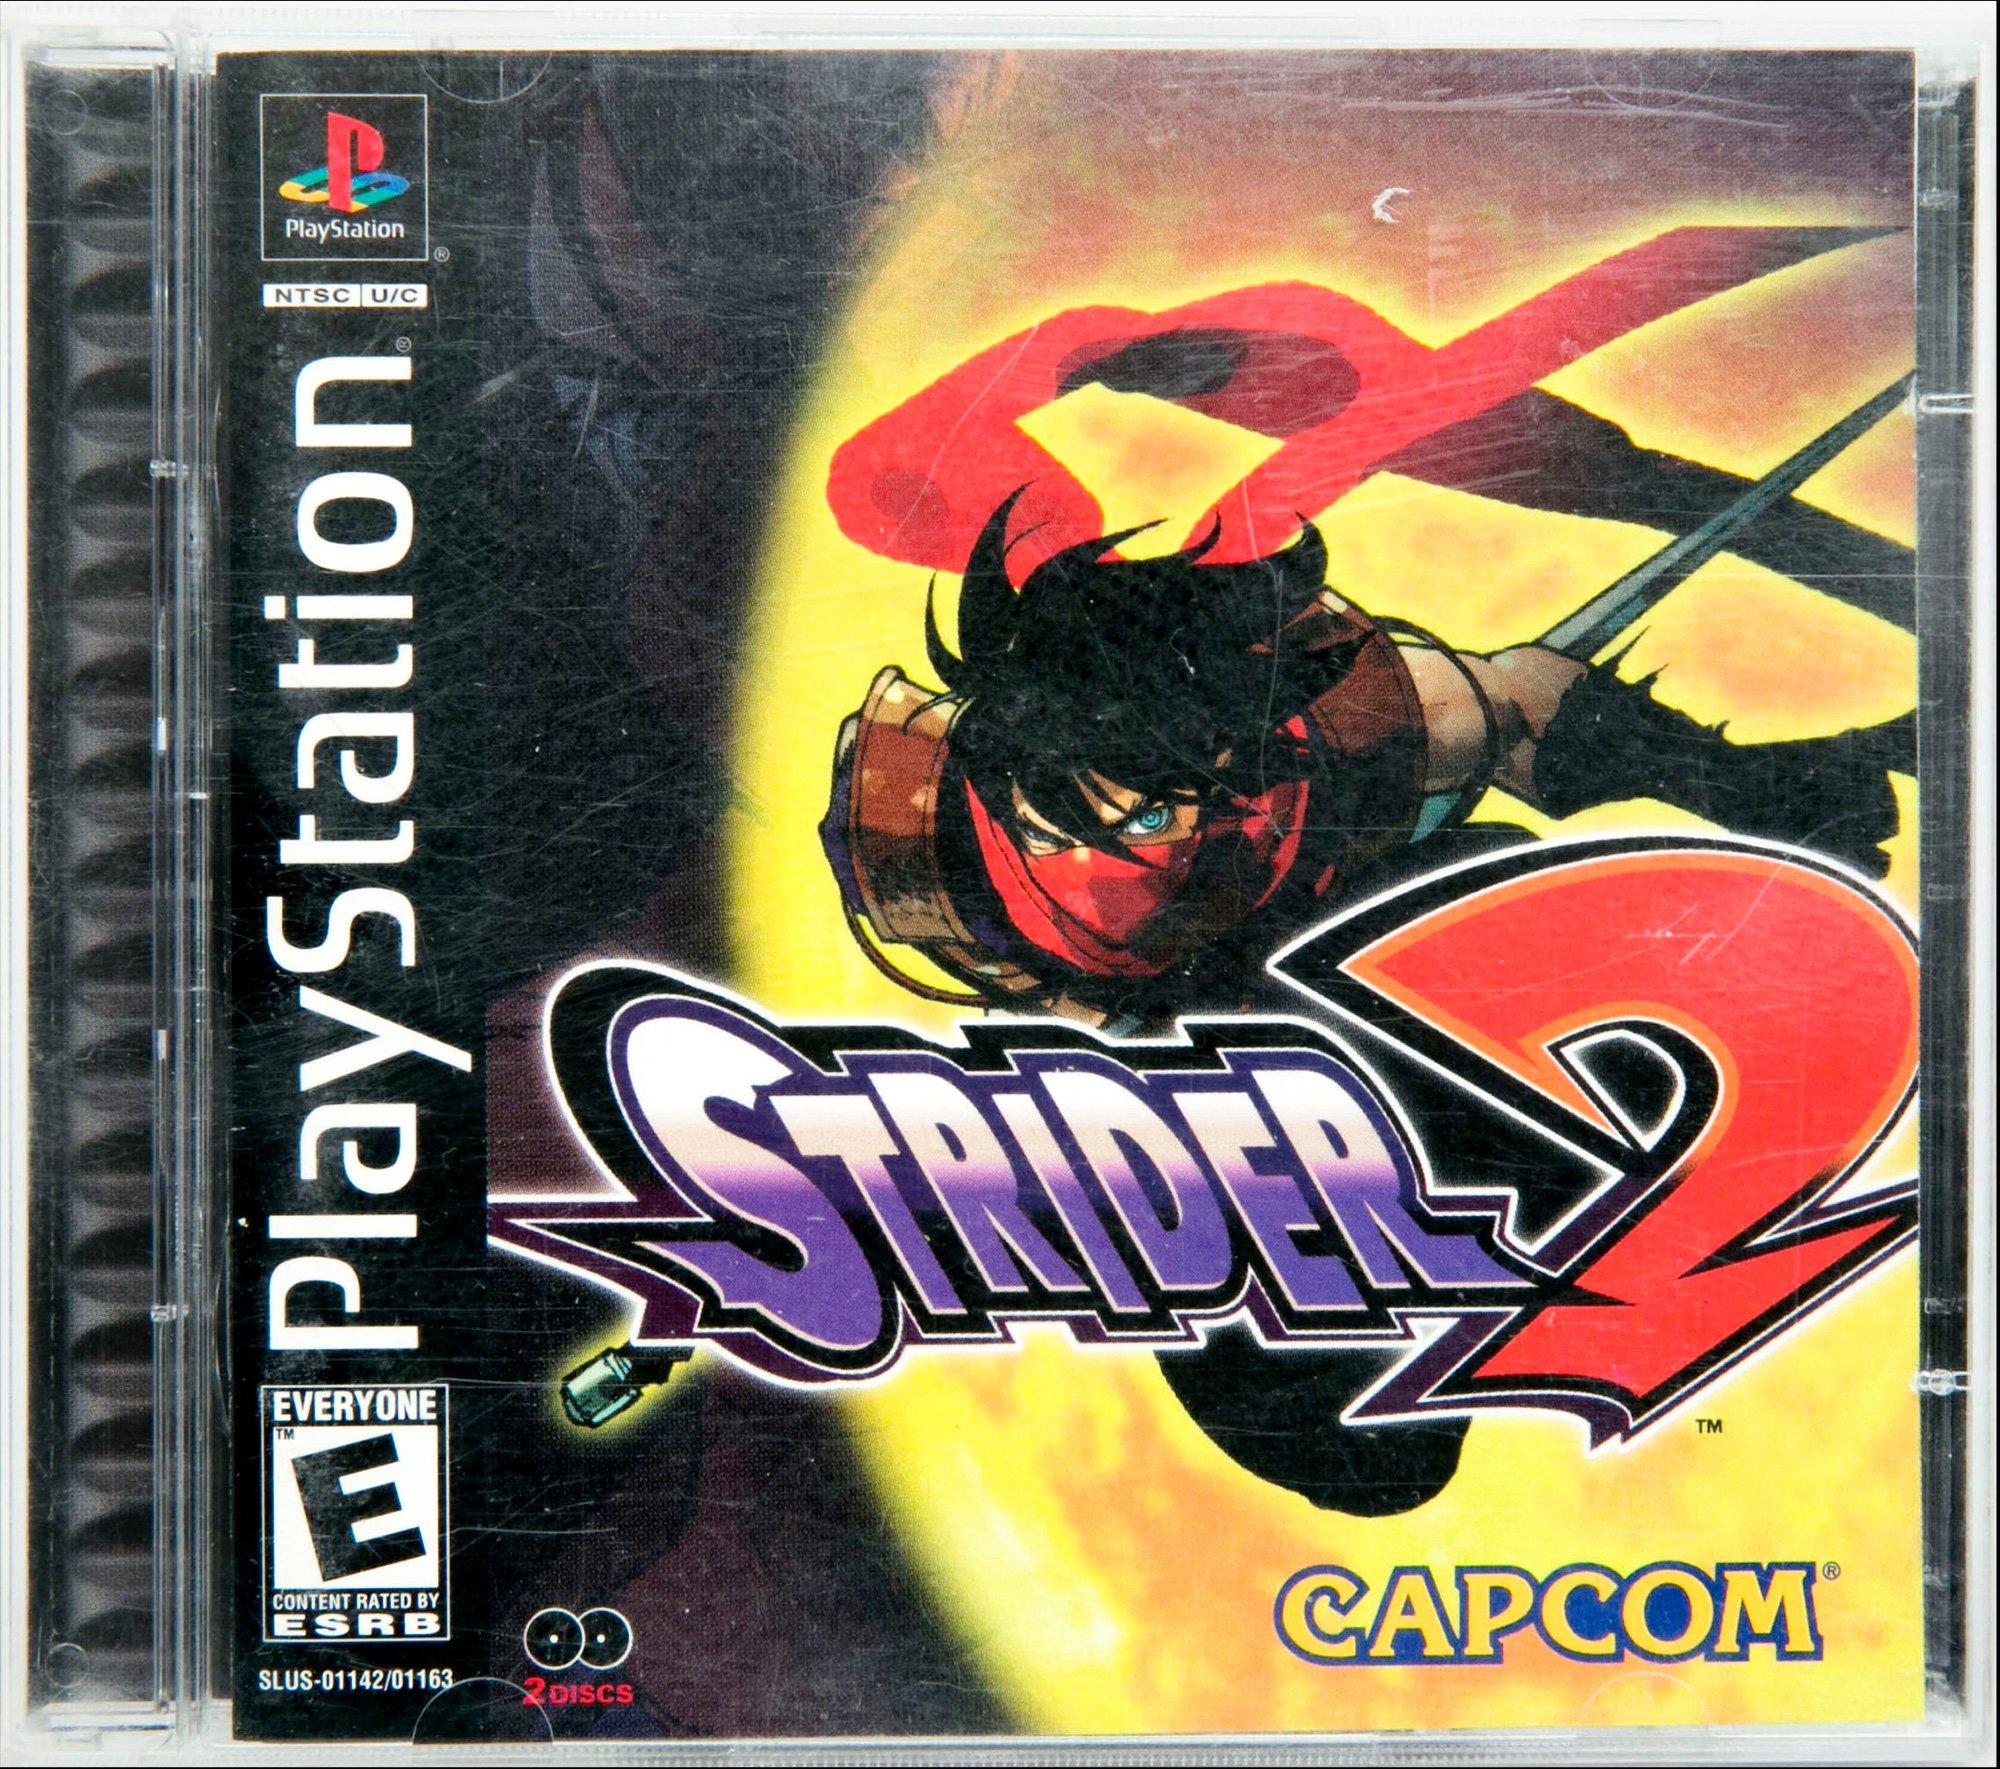 Capcom Strider 2 - PlayStation | CoolSprings Galleria